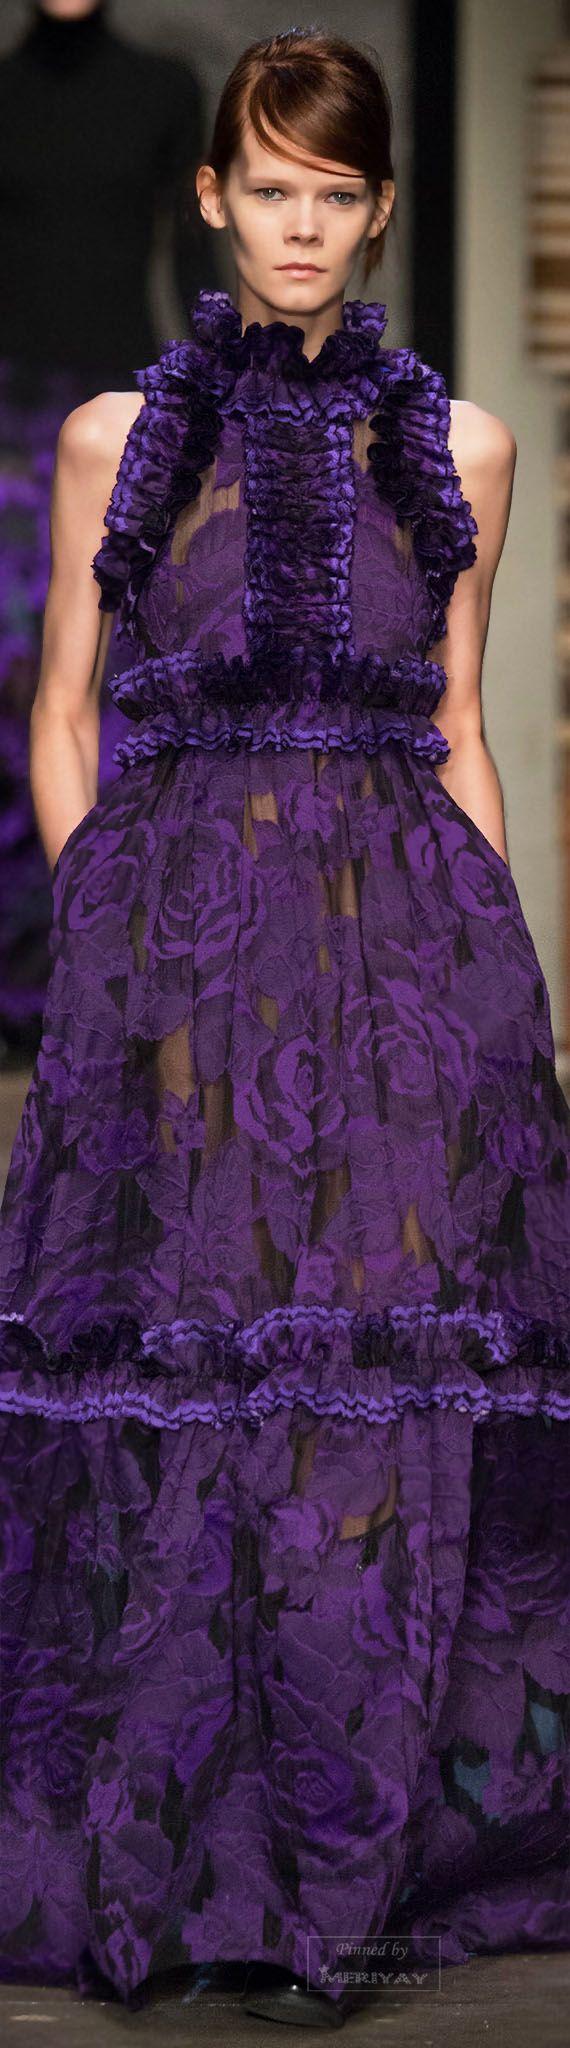 زفاف - Gowns........Purple Passions